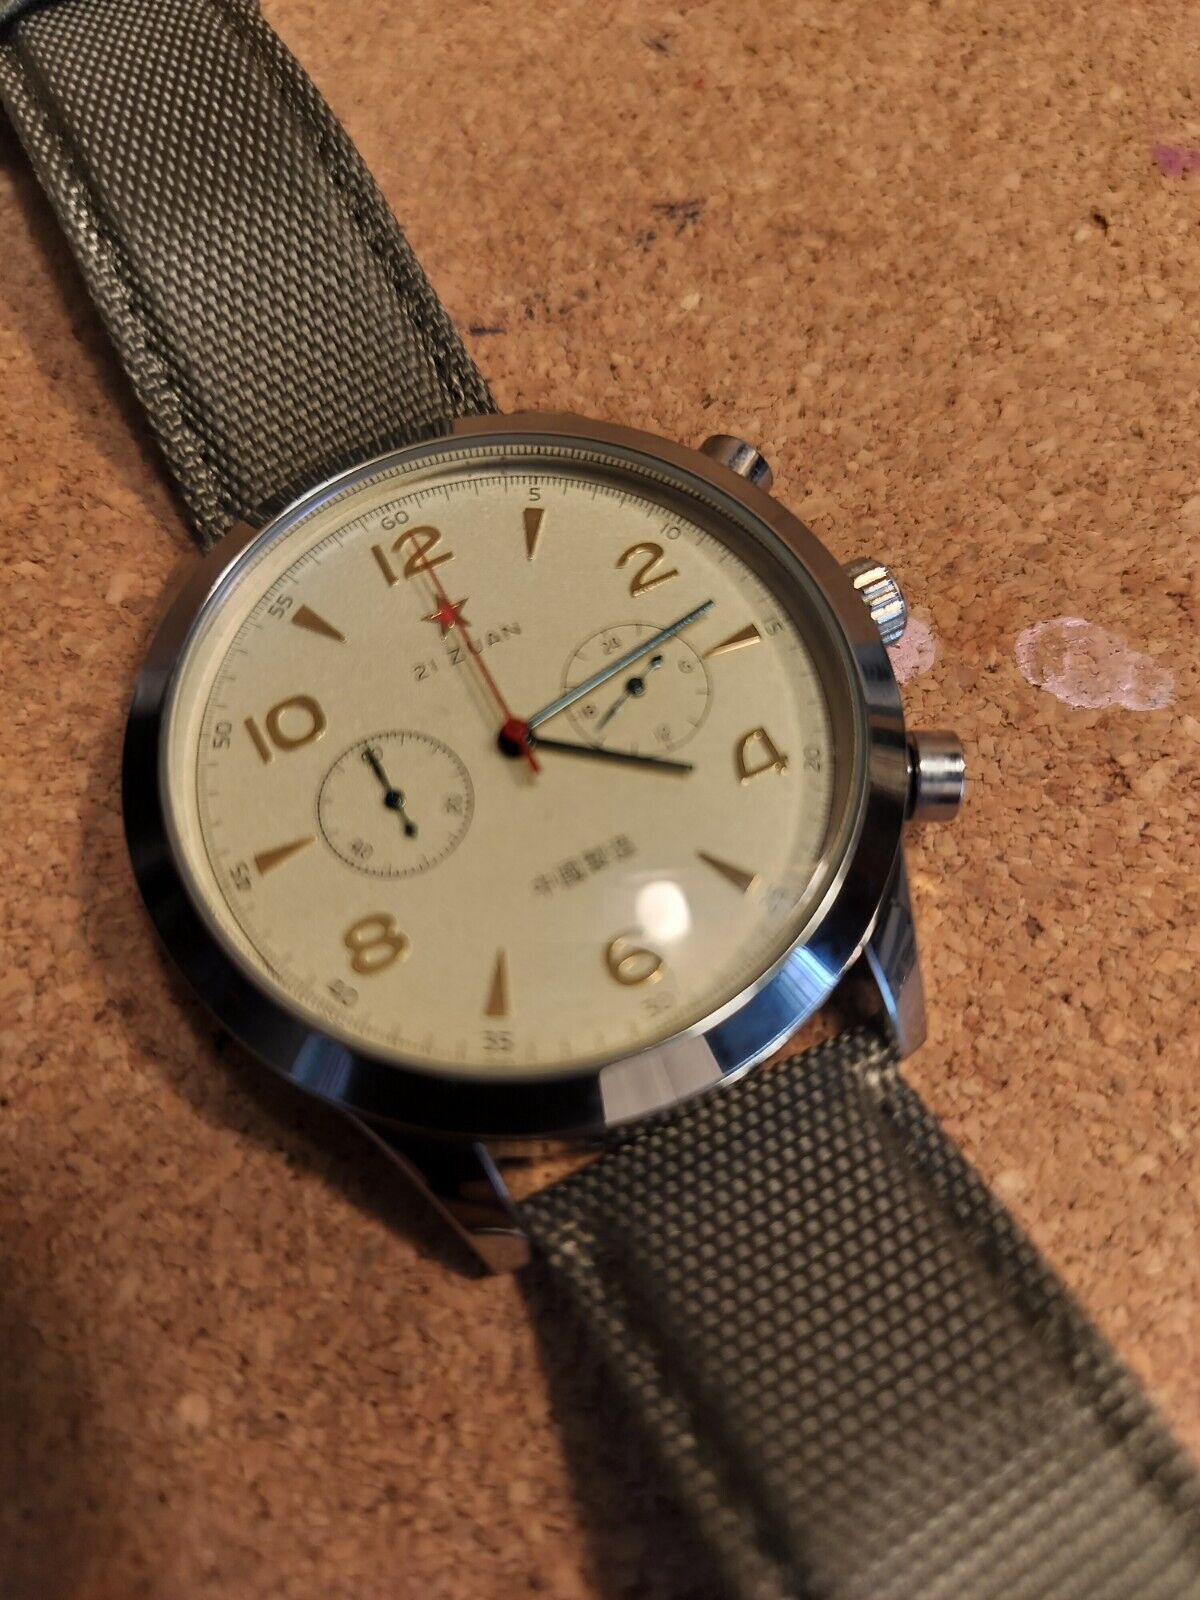 1963 Style Quartz Pilot Watch Classics Quartz Chronograph Army